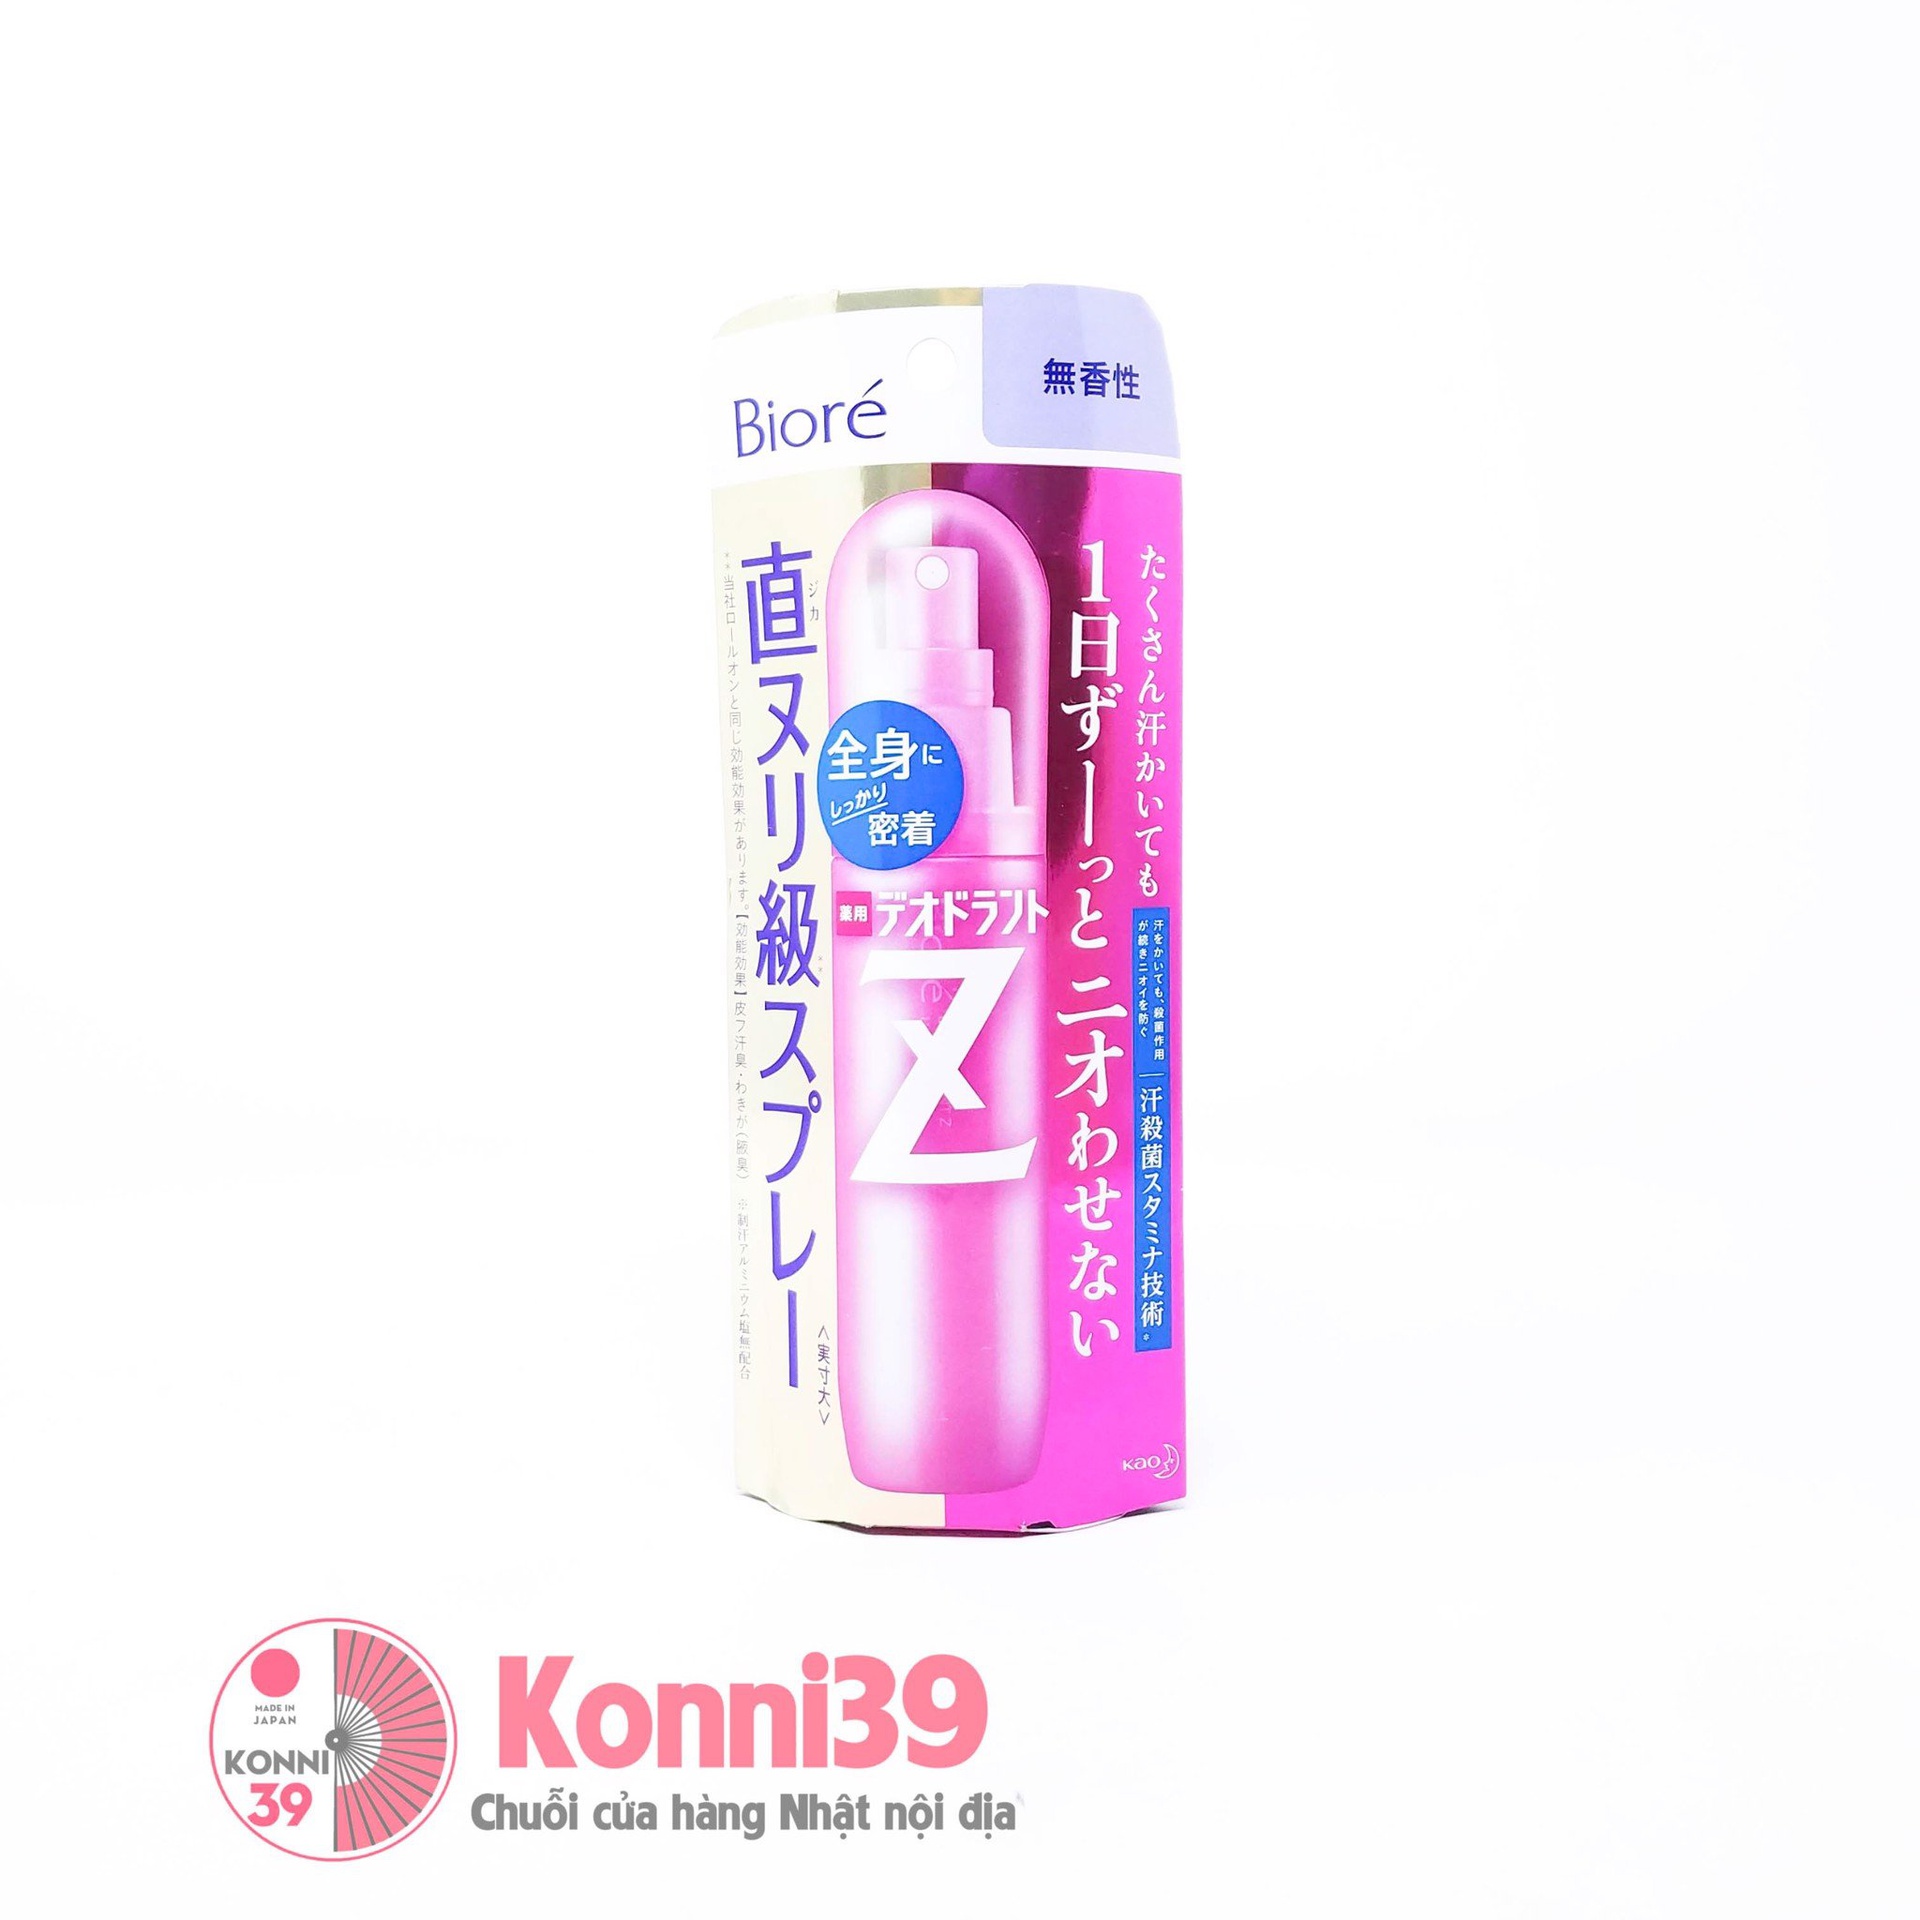 Xịt khử mùi Biore Deodorant Z thơm cơ thể 110ml (2 loại)